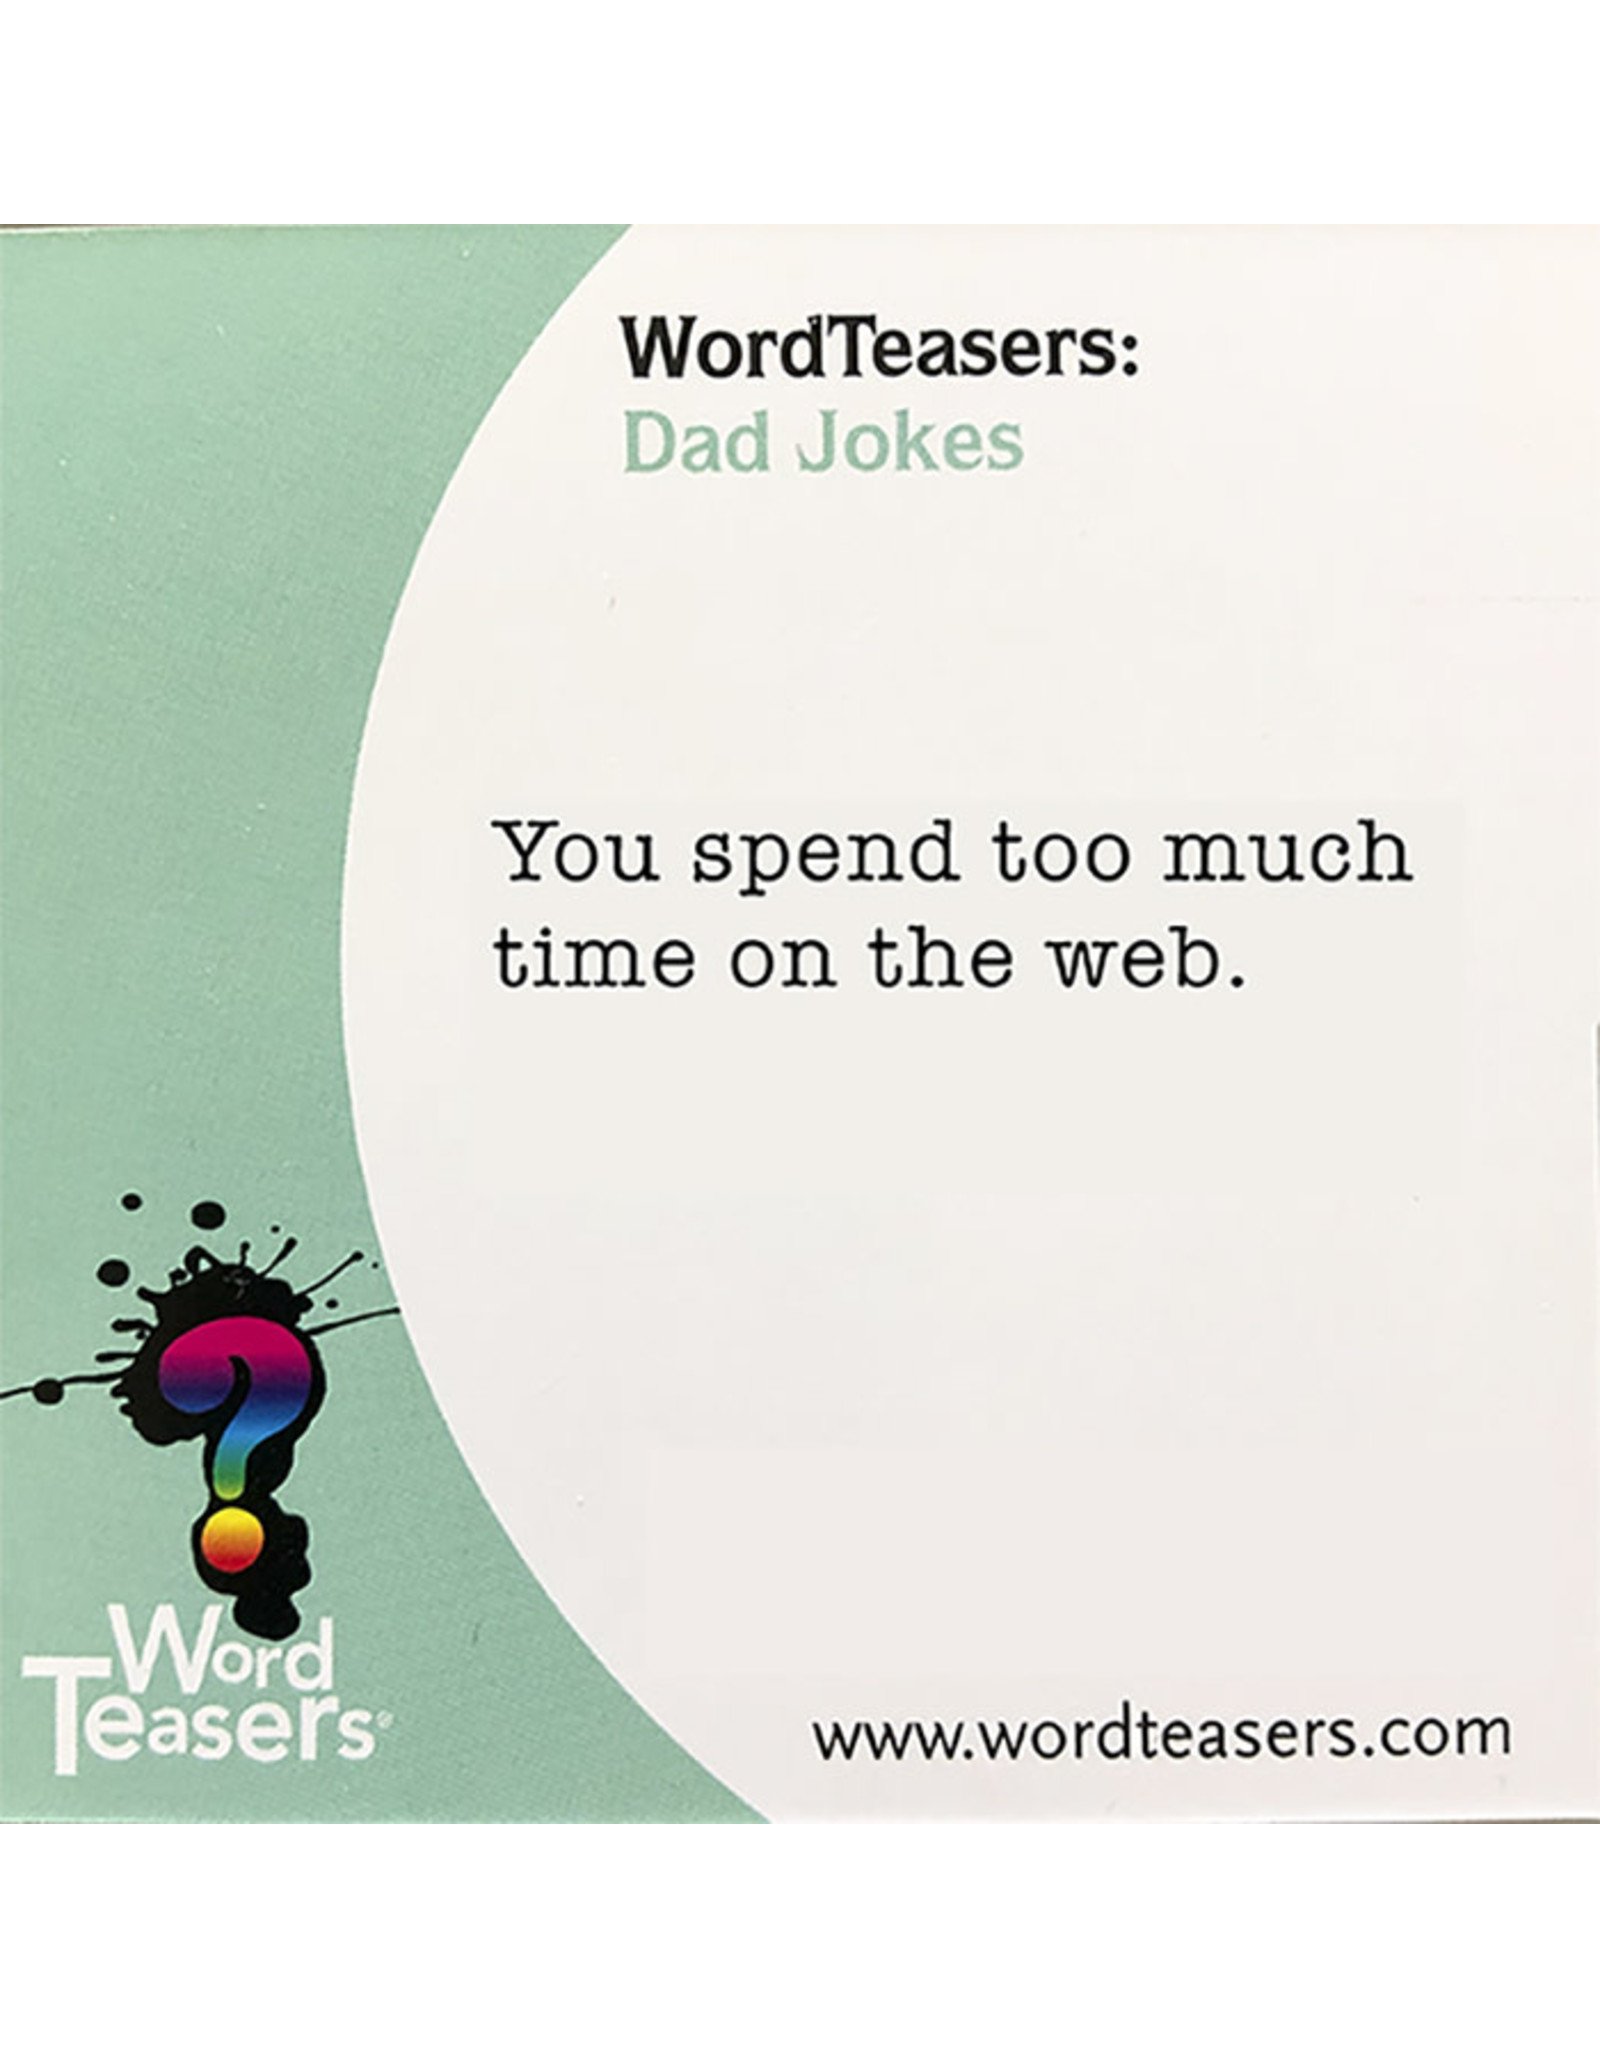 Word Teasers: The Worst Dad Jokes